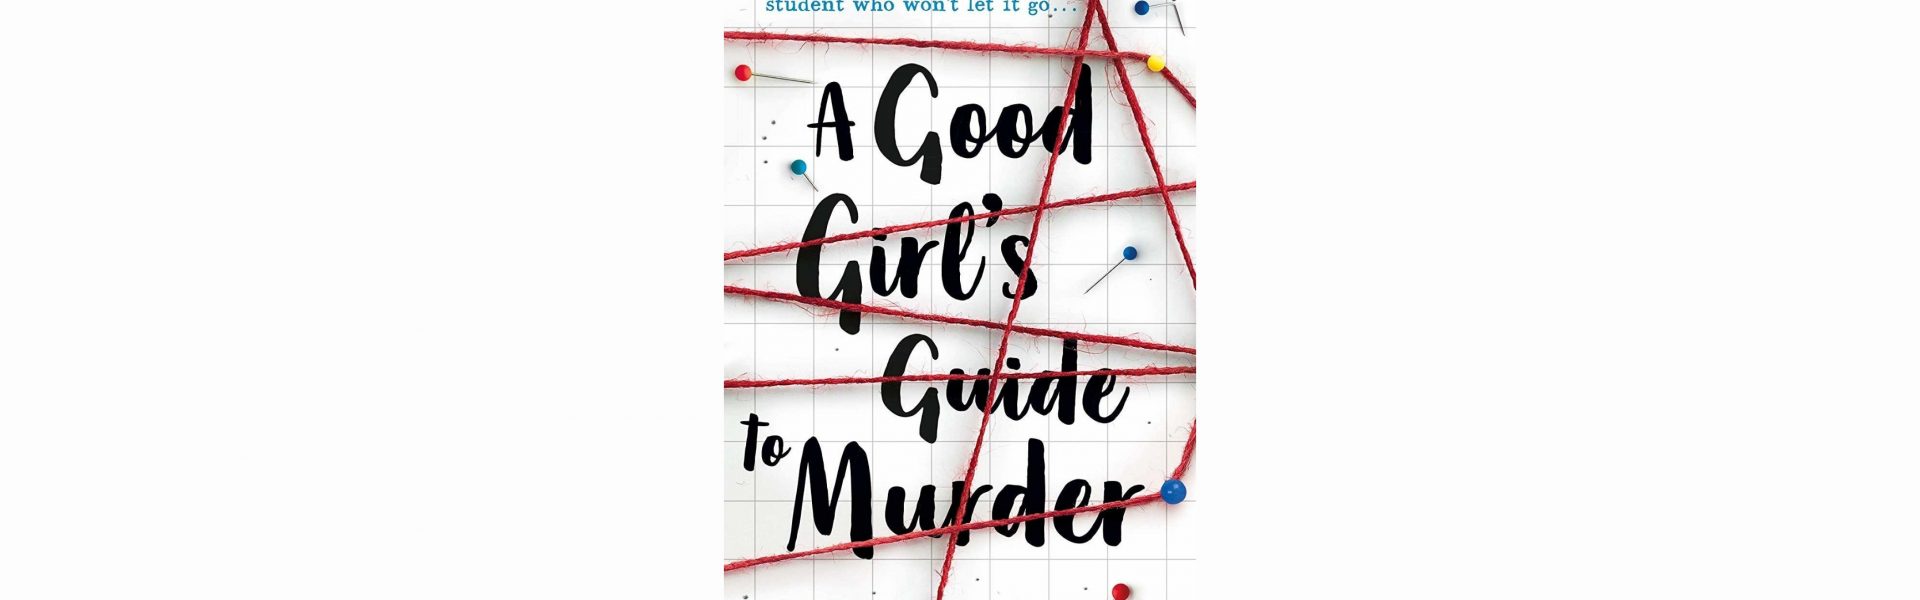 good girl guide cover